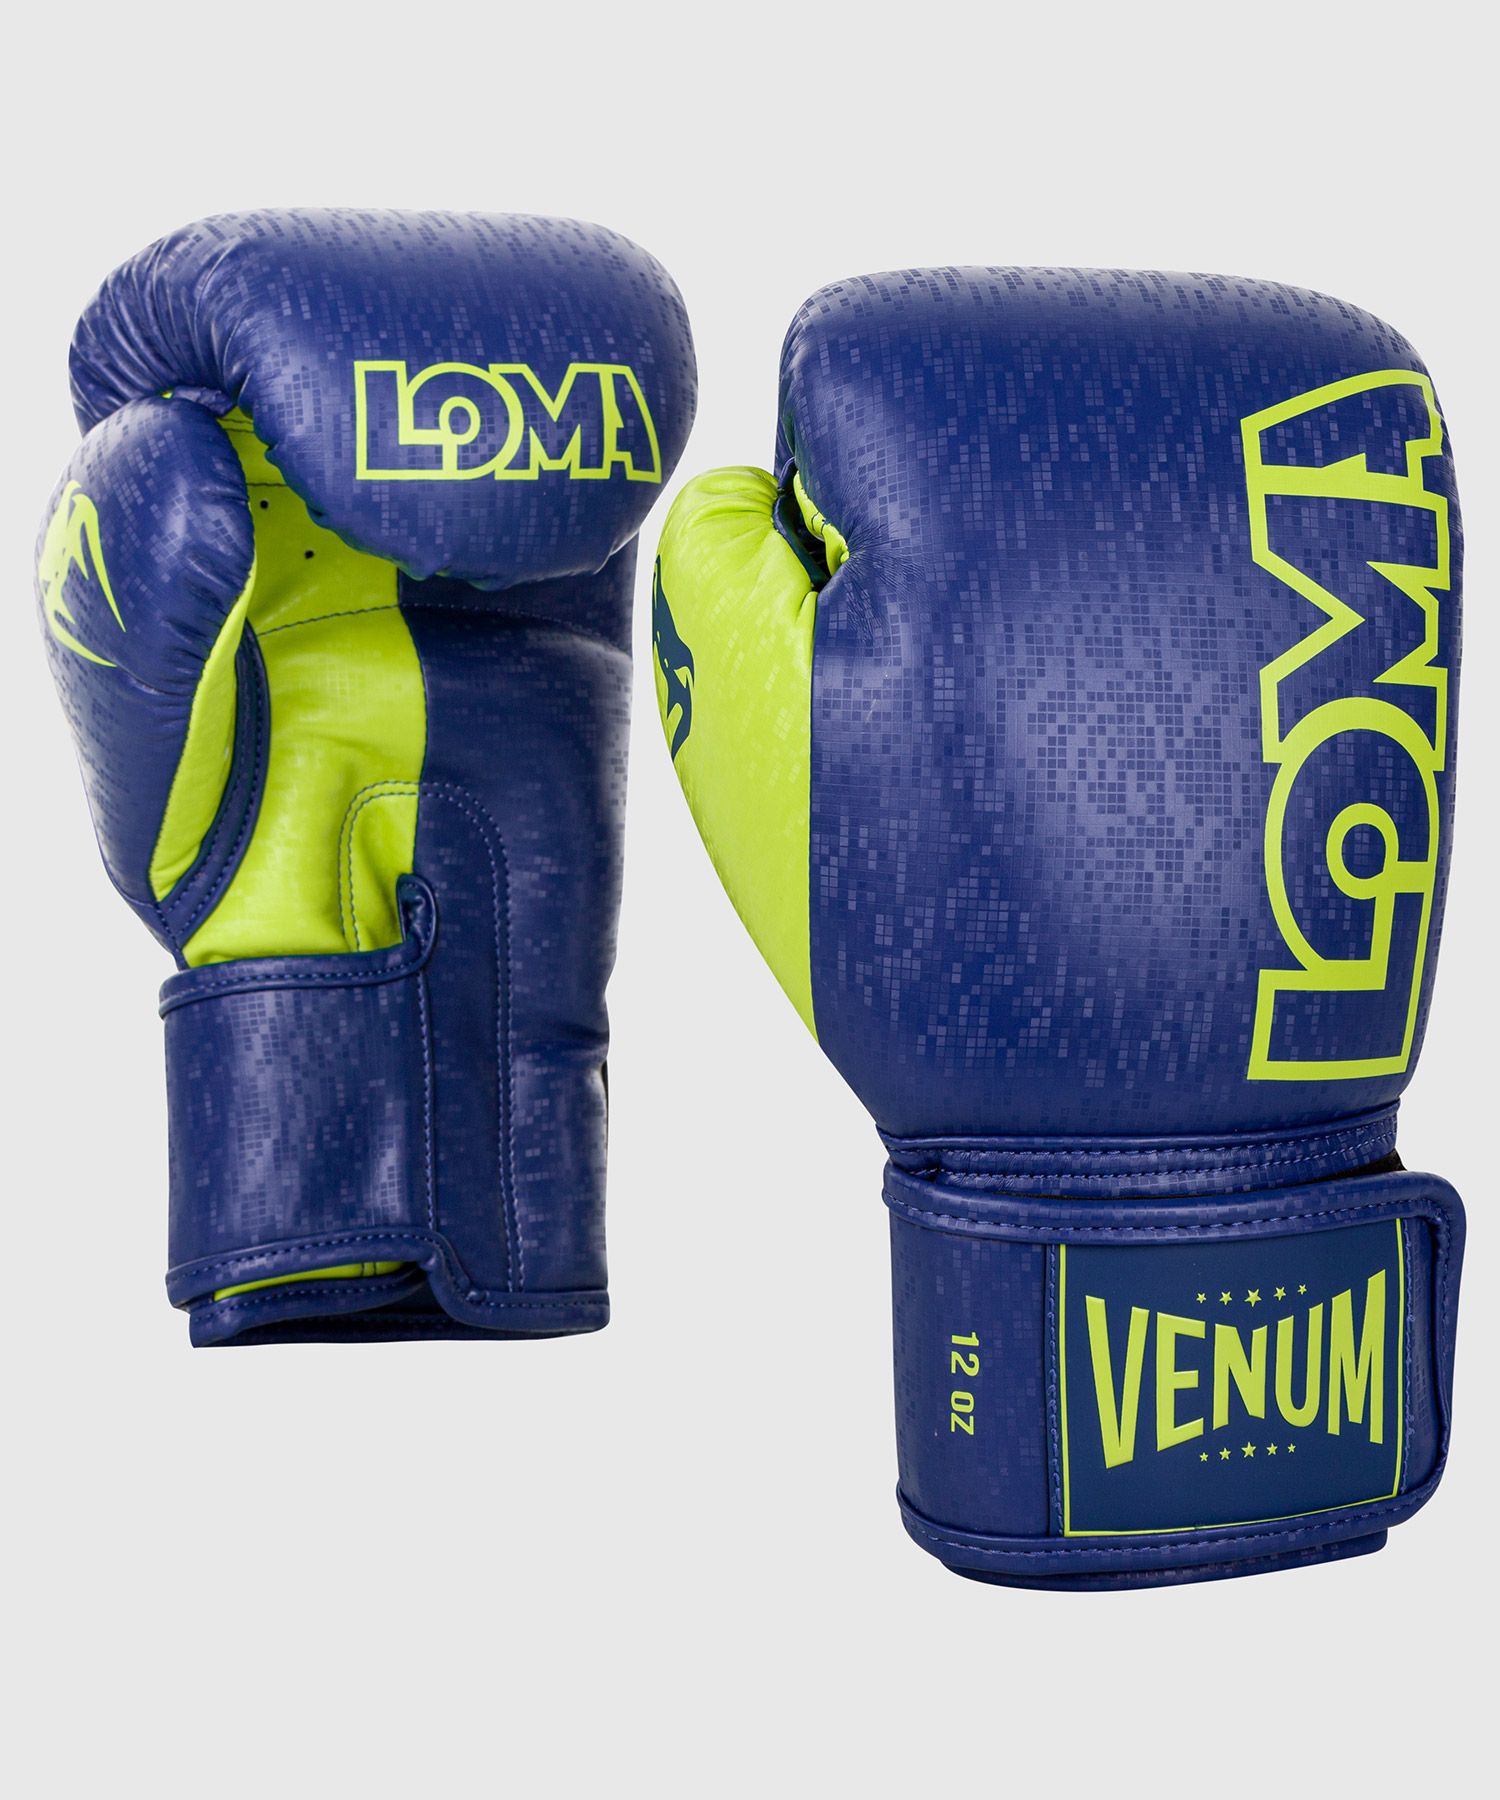 Boxerské rukavice VENUM Loma Edition - Origins